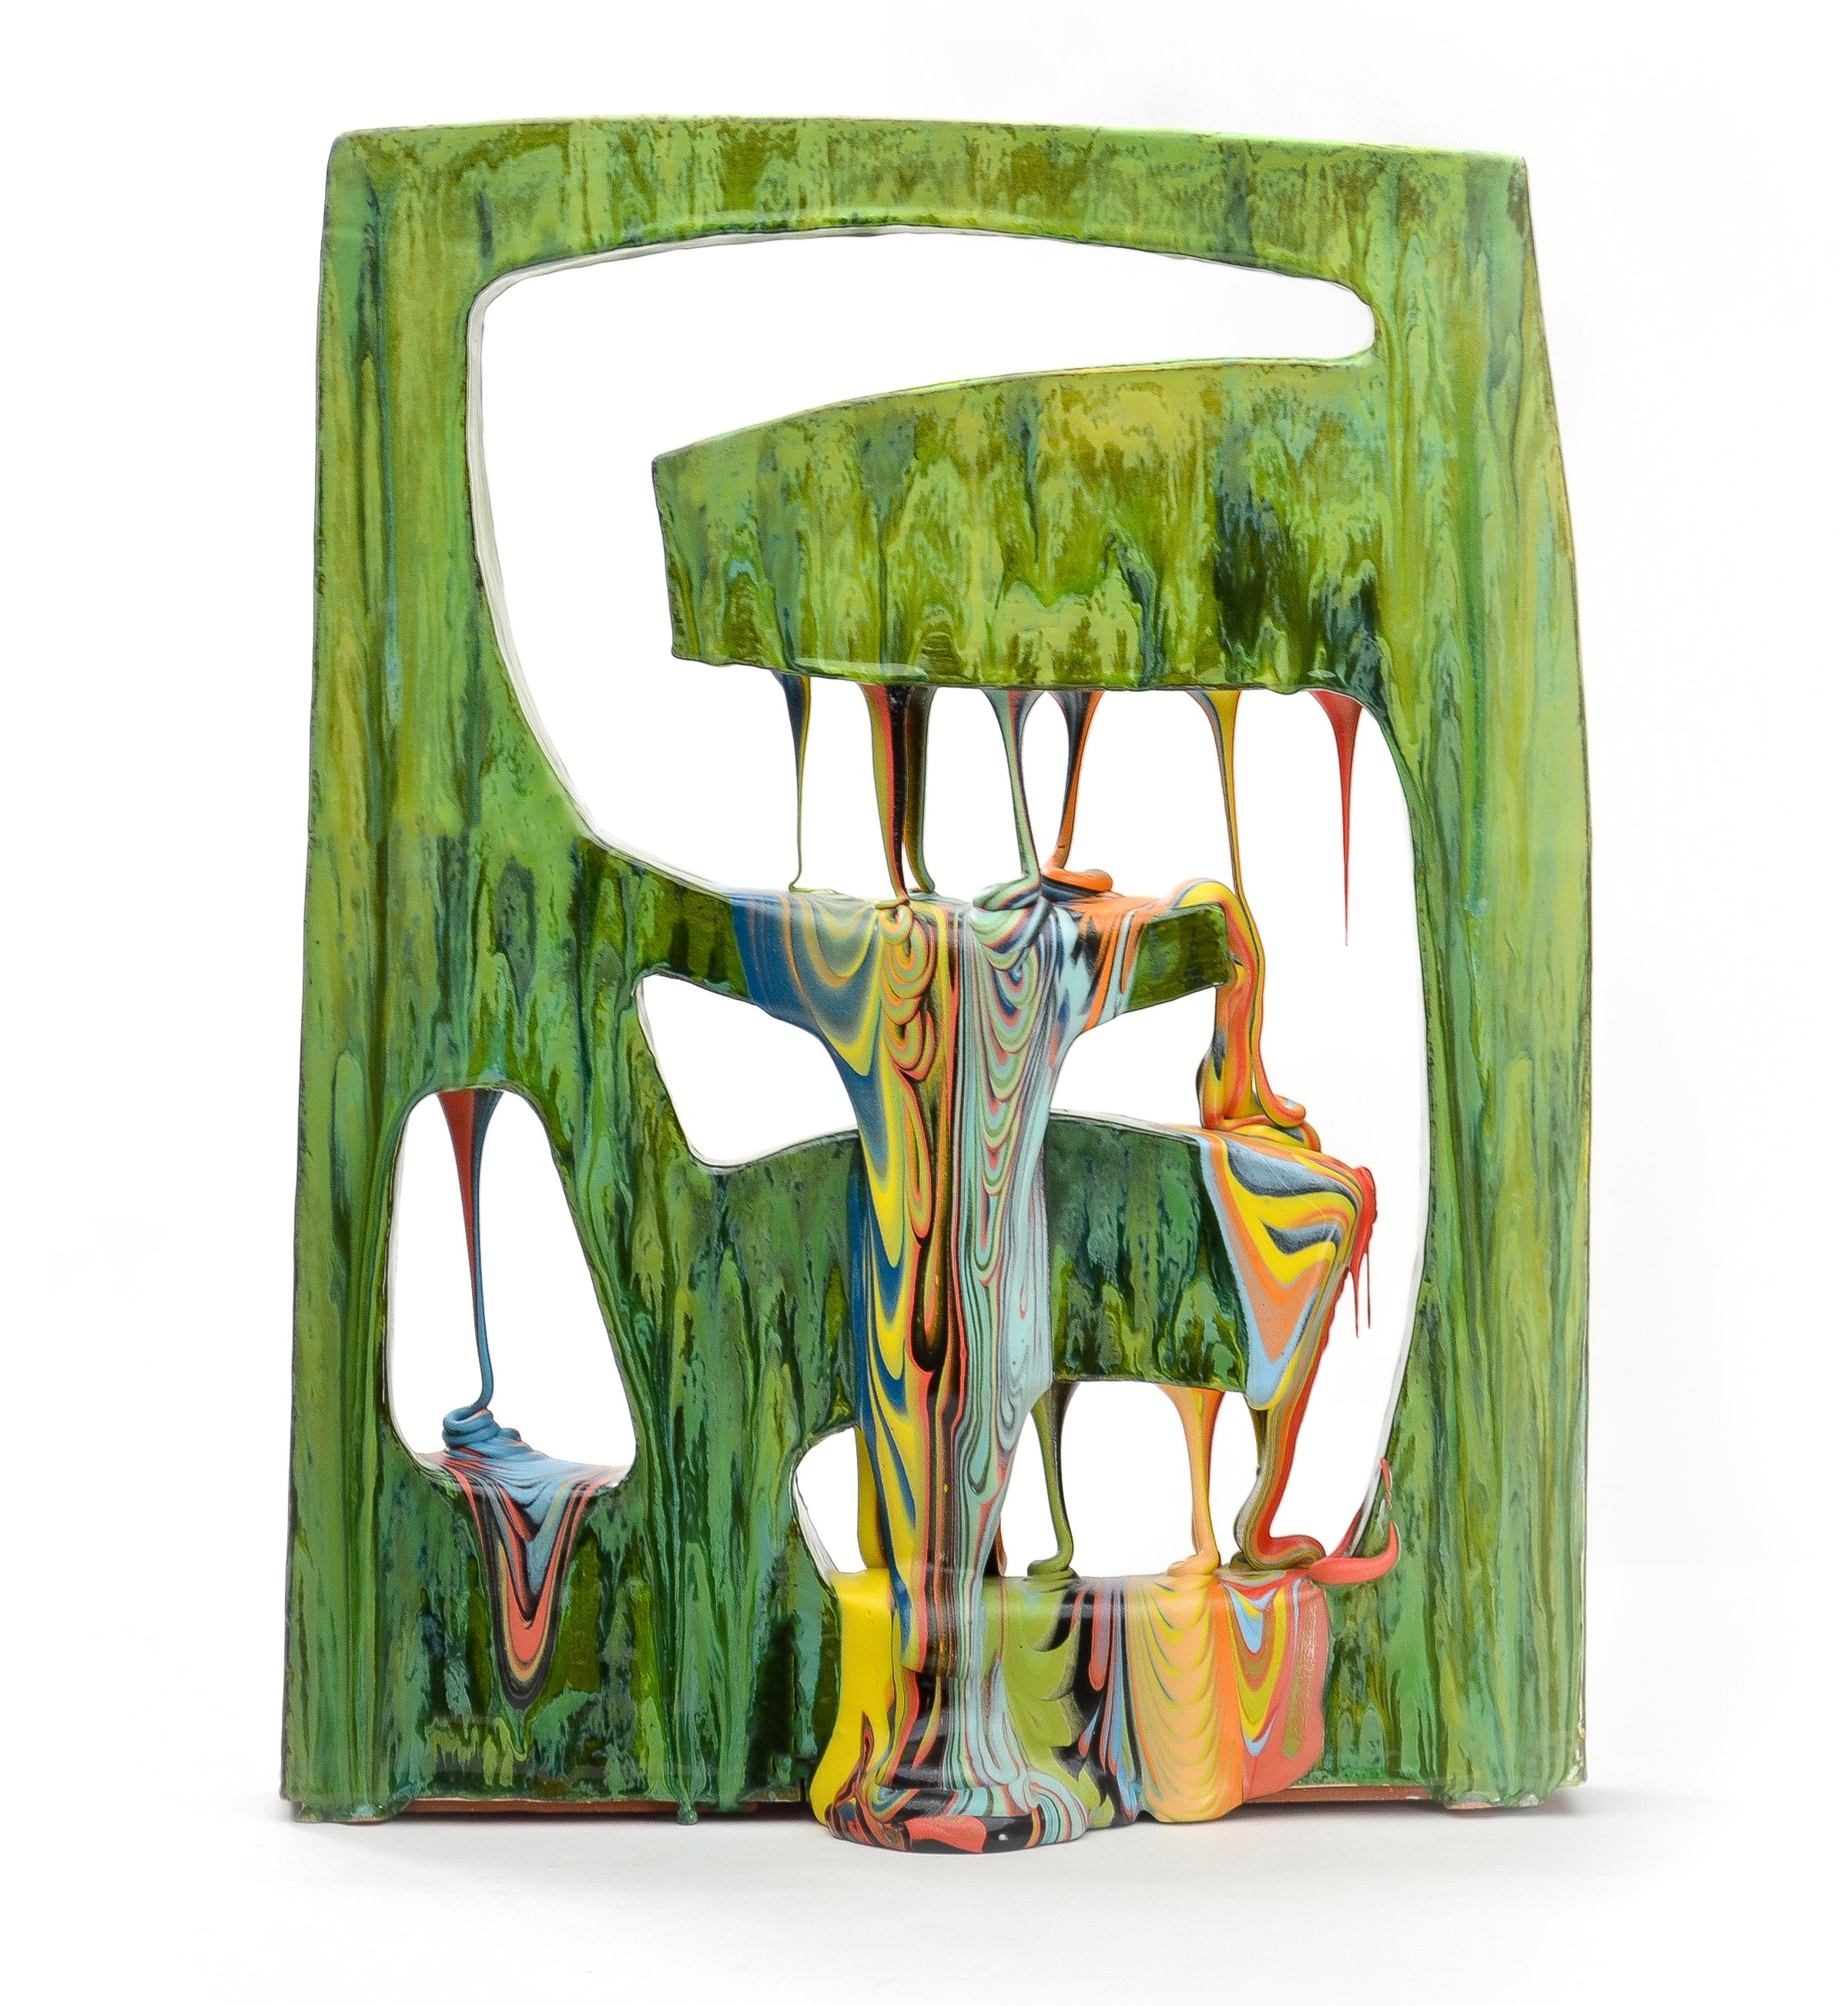 LAUREN MABRY | Green Shade No. 5, 24 x 18 x 7.5 inches / 61 x 45.7 x 19 cm, ceramic, glaze, 2022